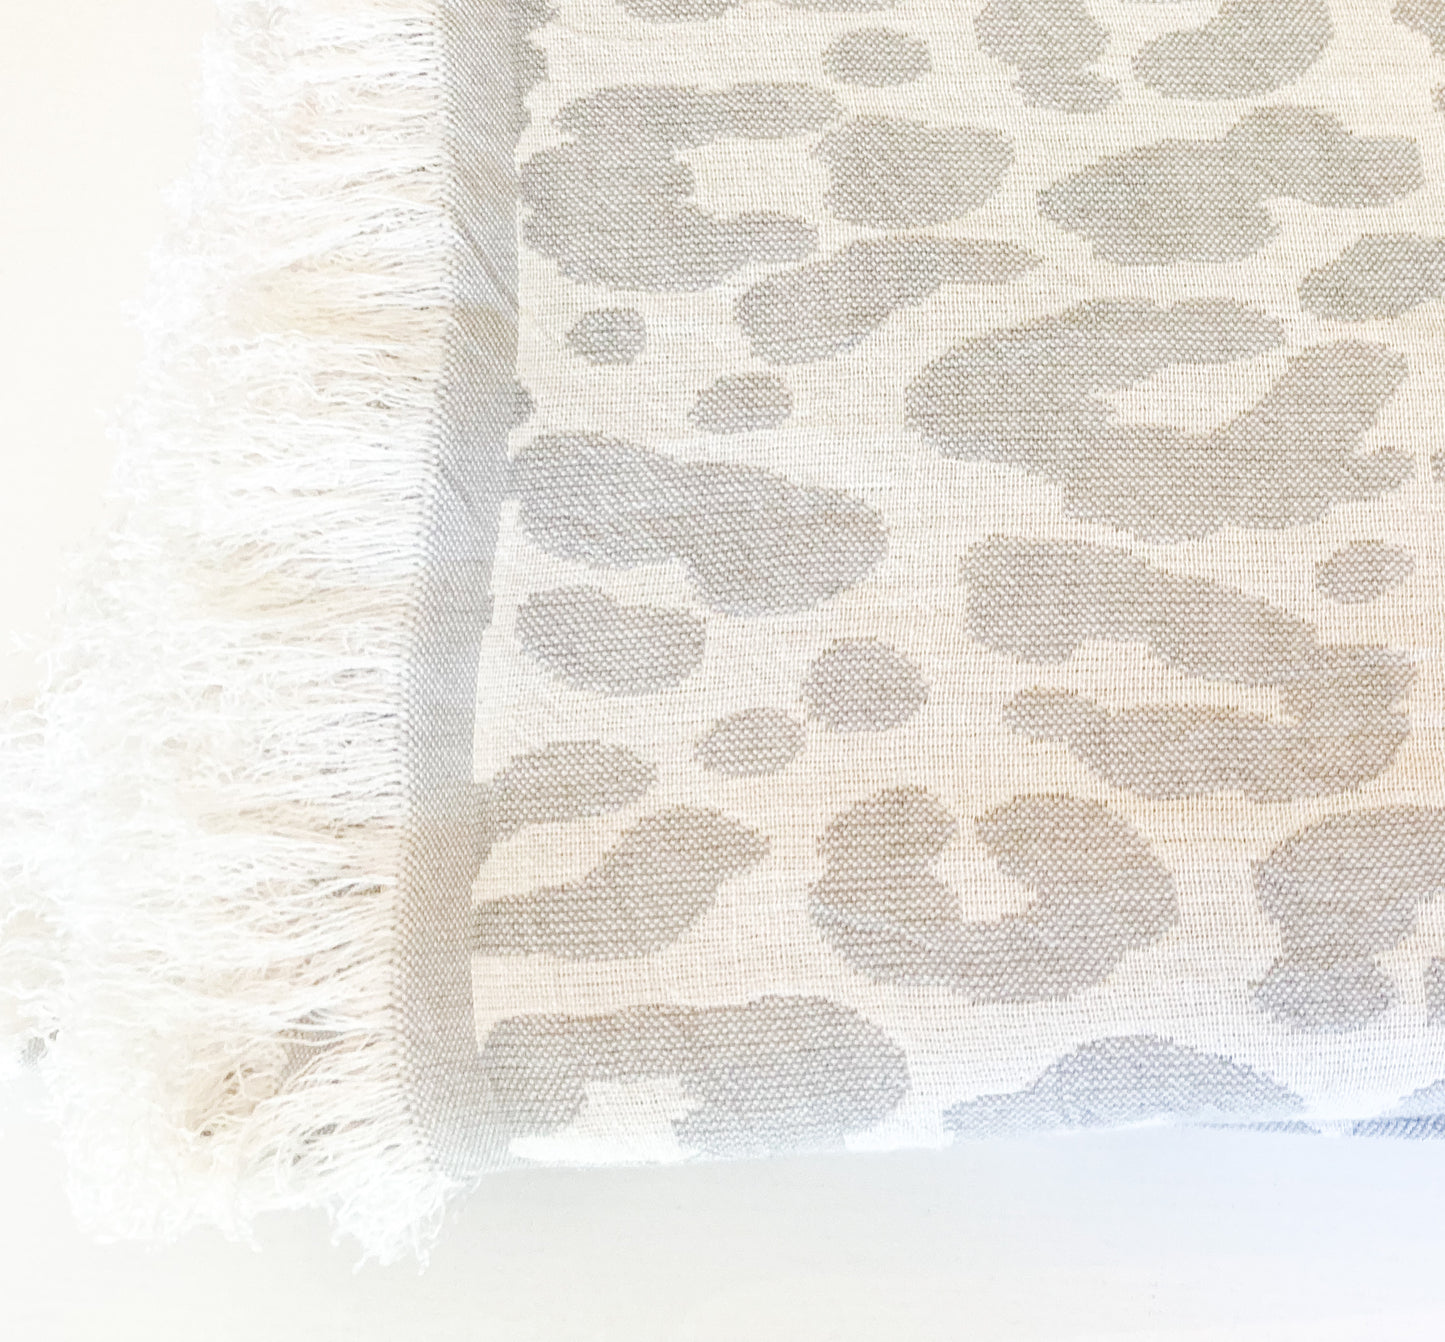 Leopard Print Throw Blanket